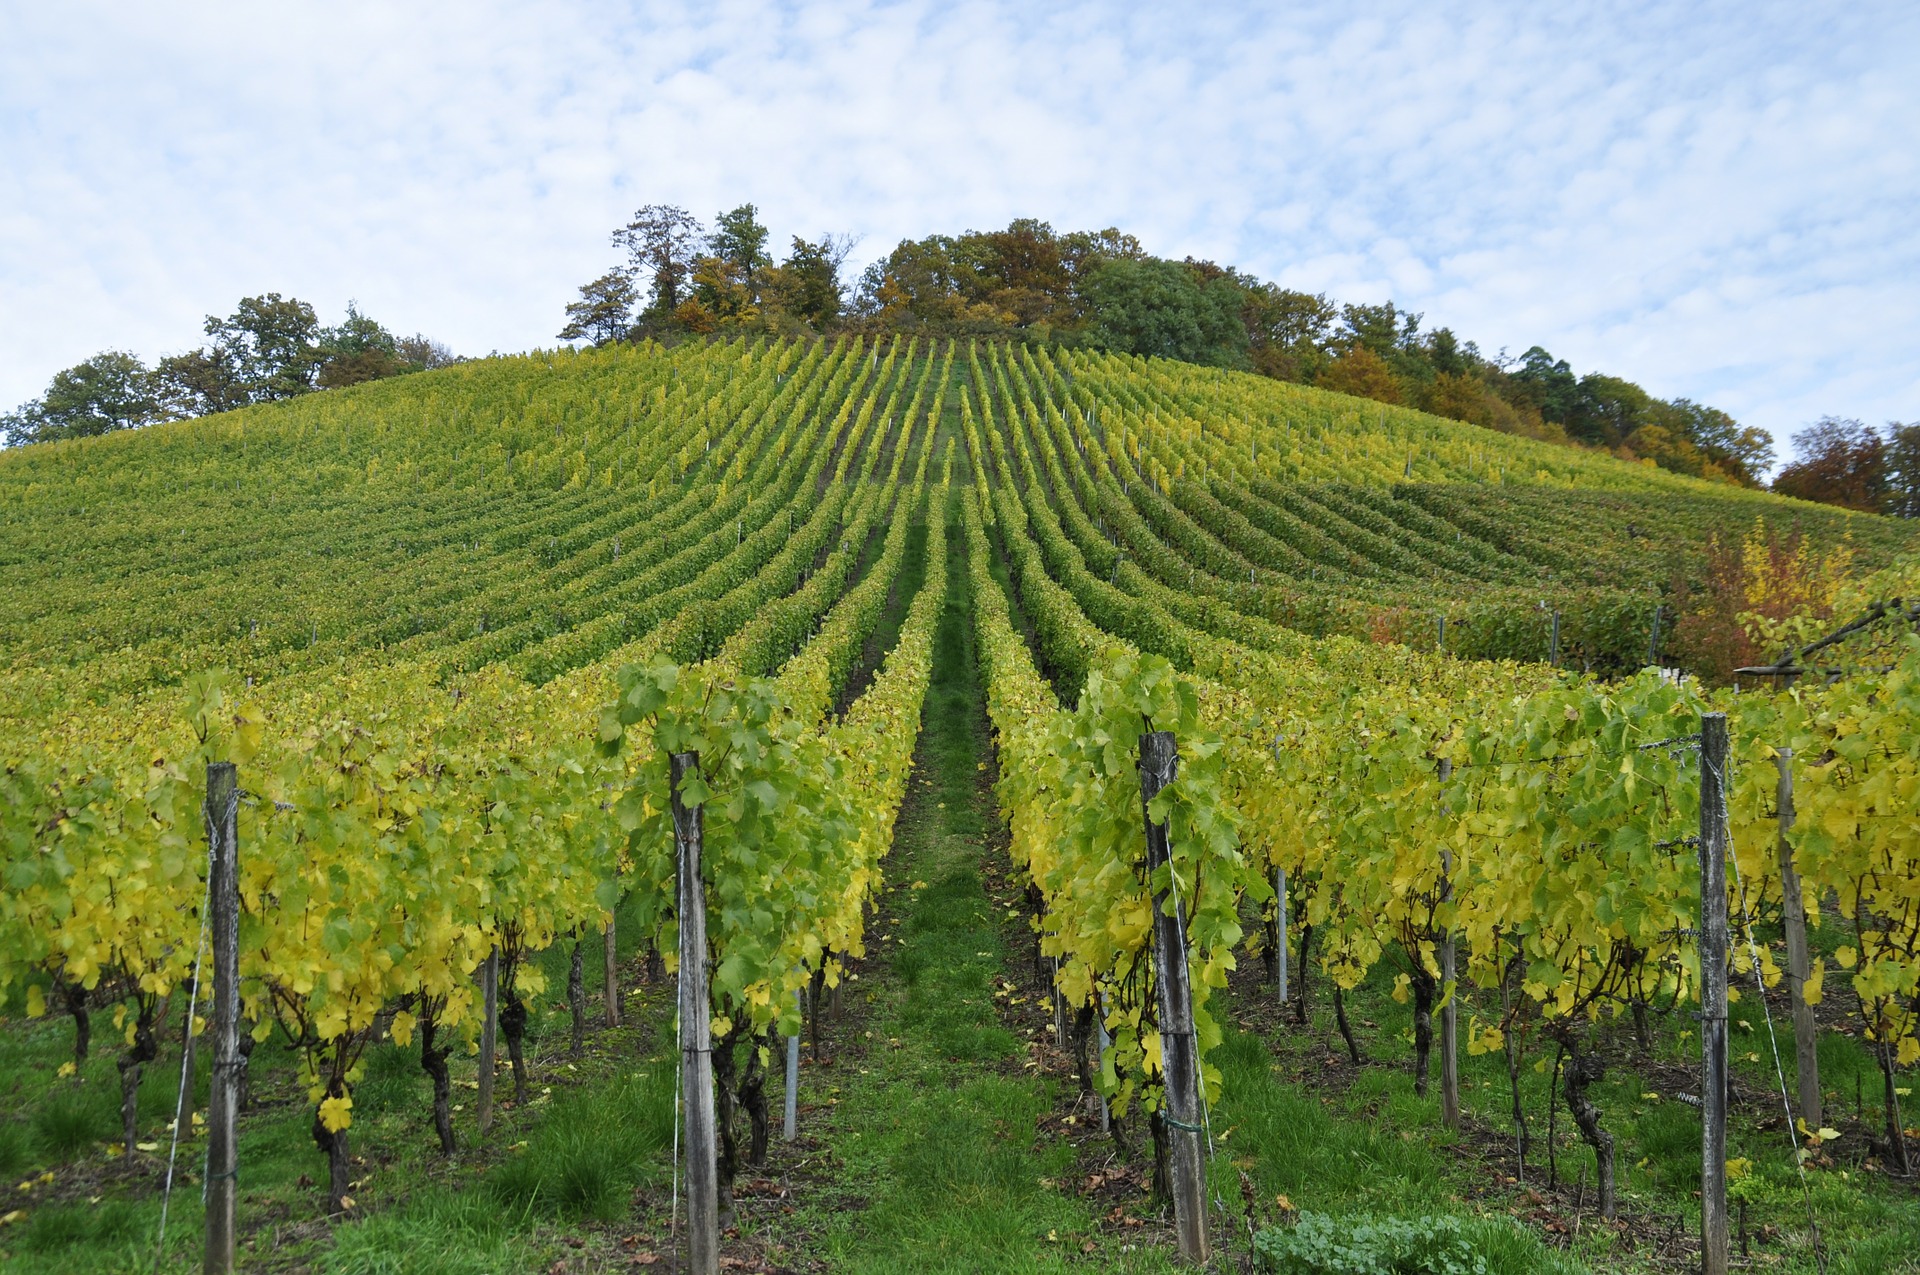 Post-harvest Vineyard Management: preparing vines for resting